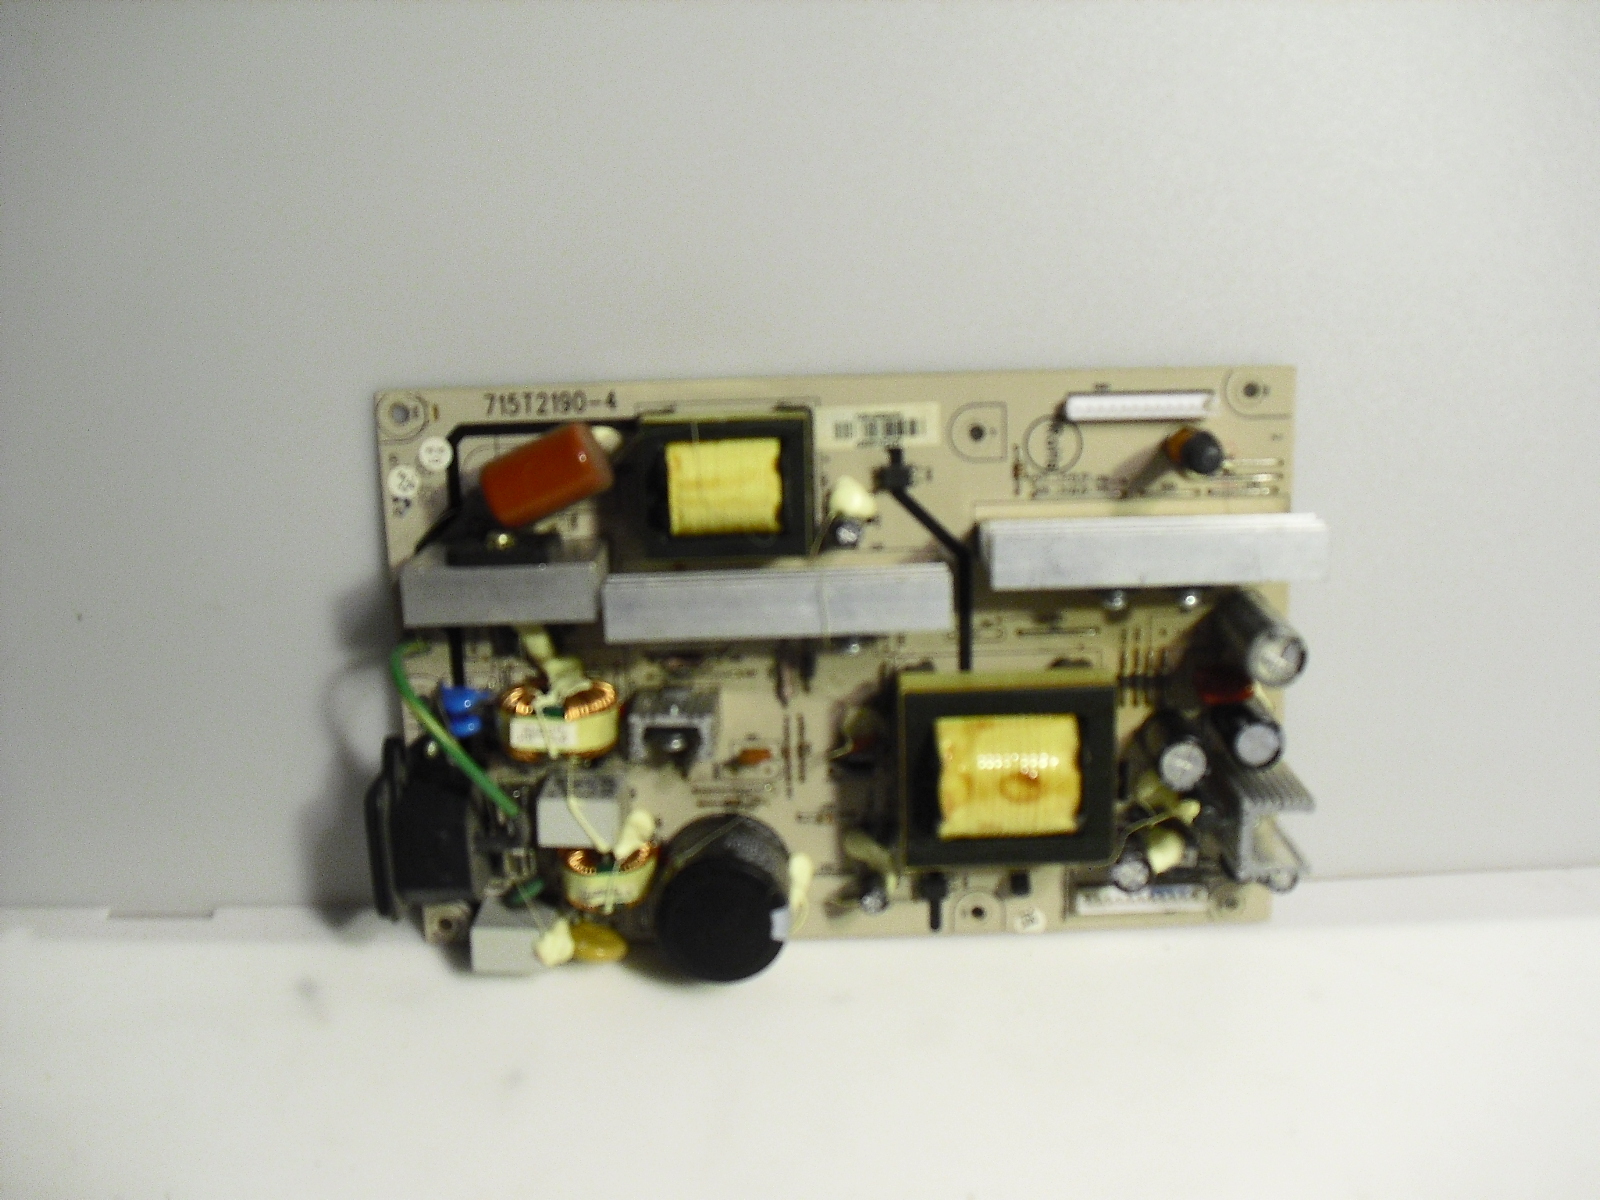 715t2190-4  power  board   for  magnavox   32md357b/37b - $28.99